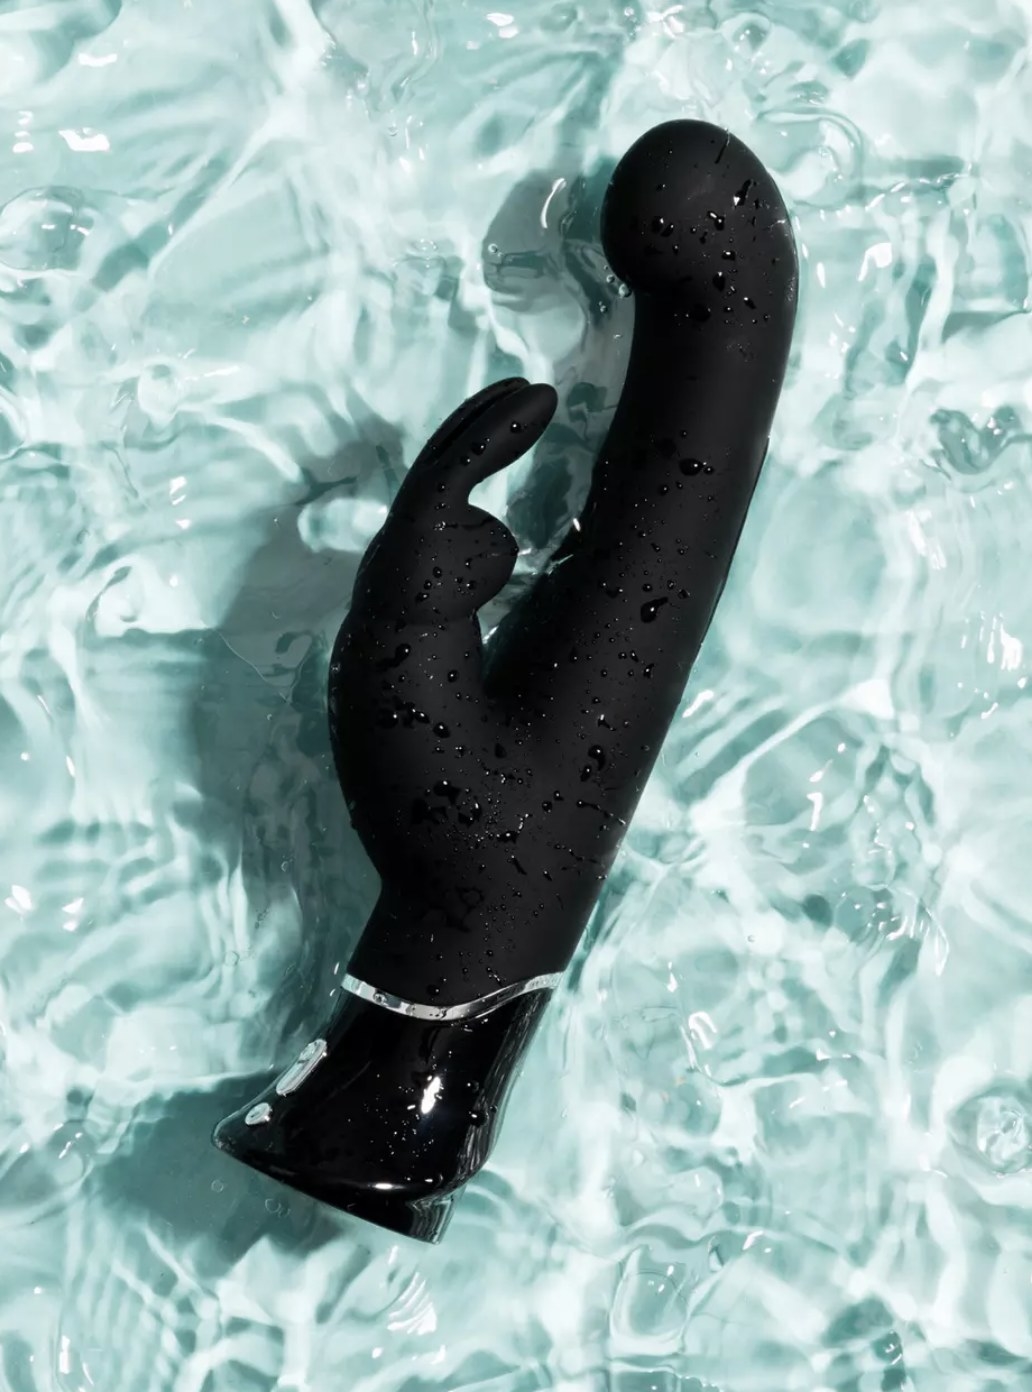 The black vibrator in water